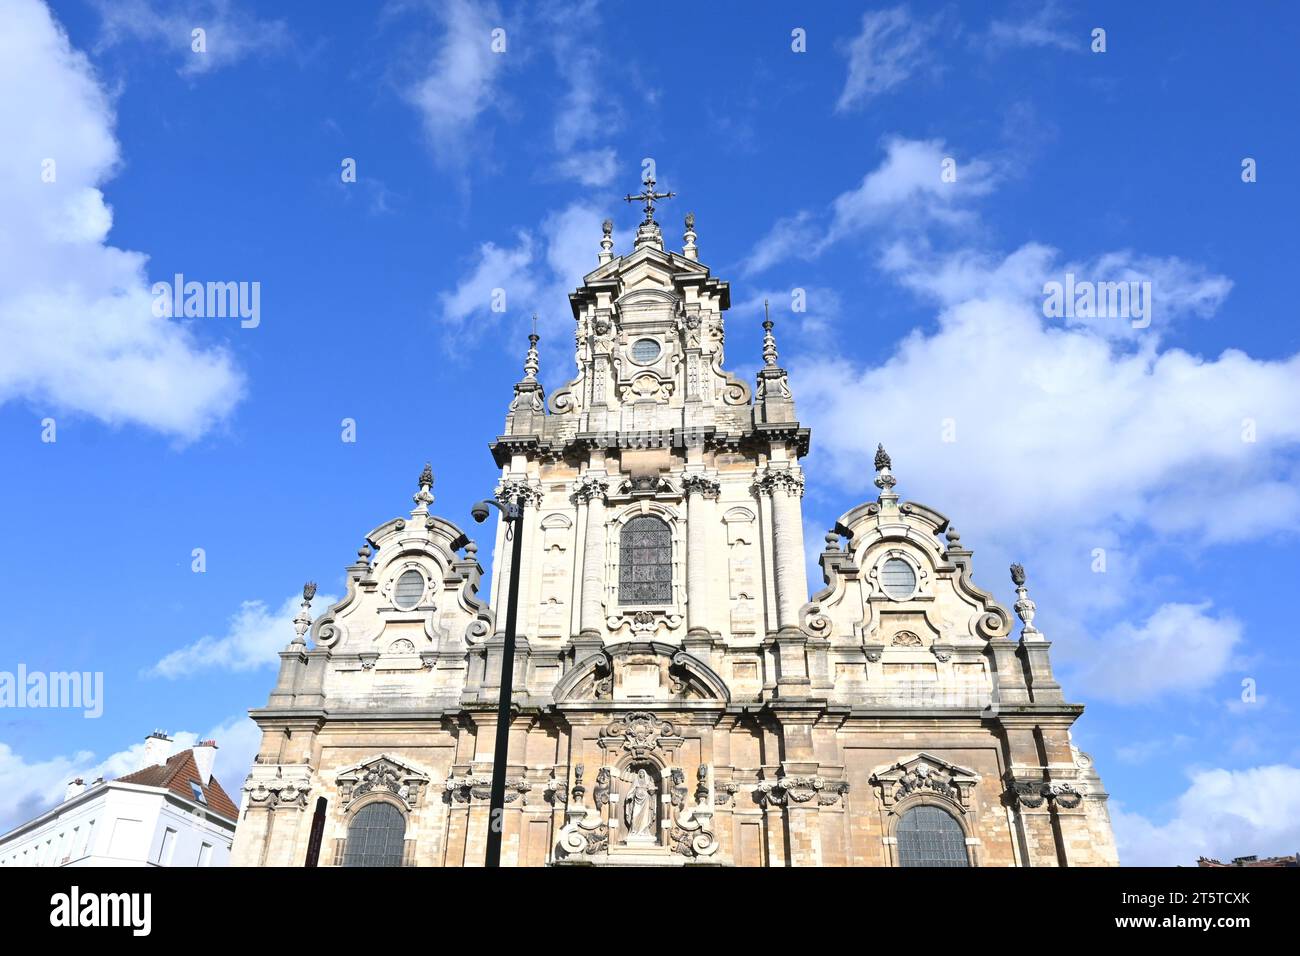 Vorderseite der Kirche St. Johannes der Täufer in der Béguinage (Eglise Saint-Jean-Baptiste au Béguinage) – Brüssel Belgien – 24. Oktober 2023 Stockfoto